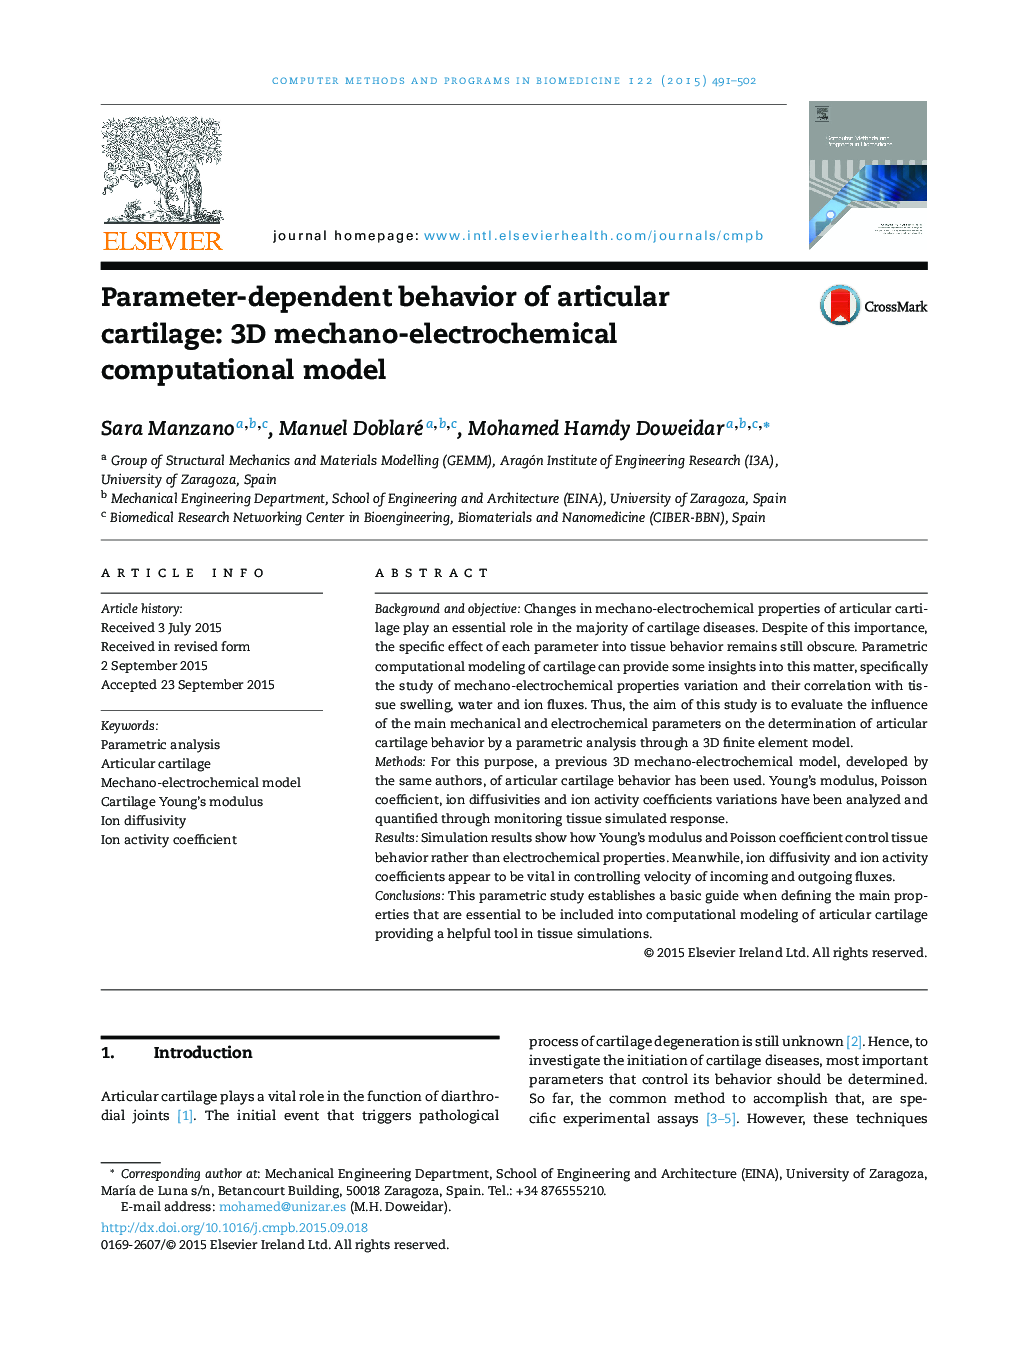 Parameter-dependent behavior of articular cartilage: 3D mechano-electrochemical computational model